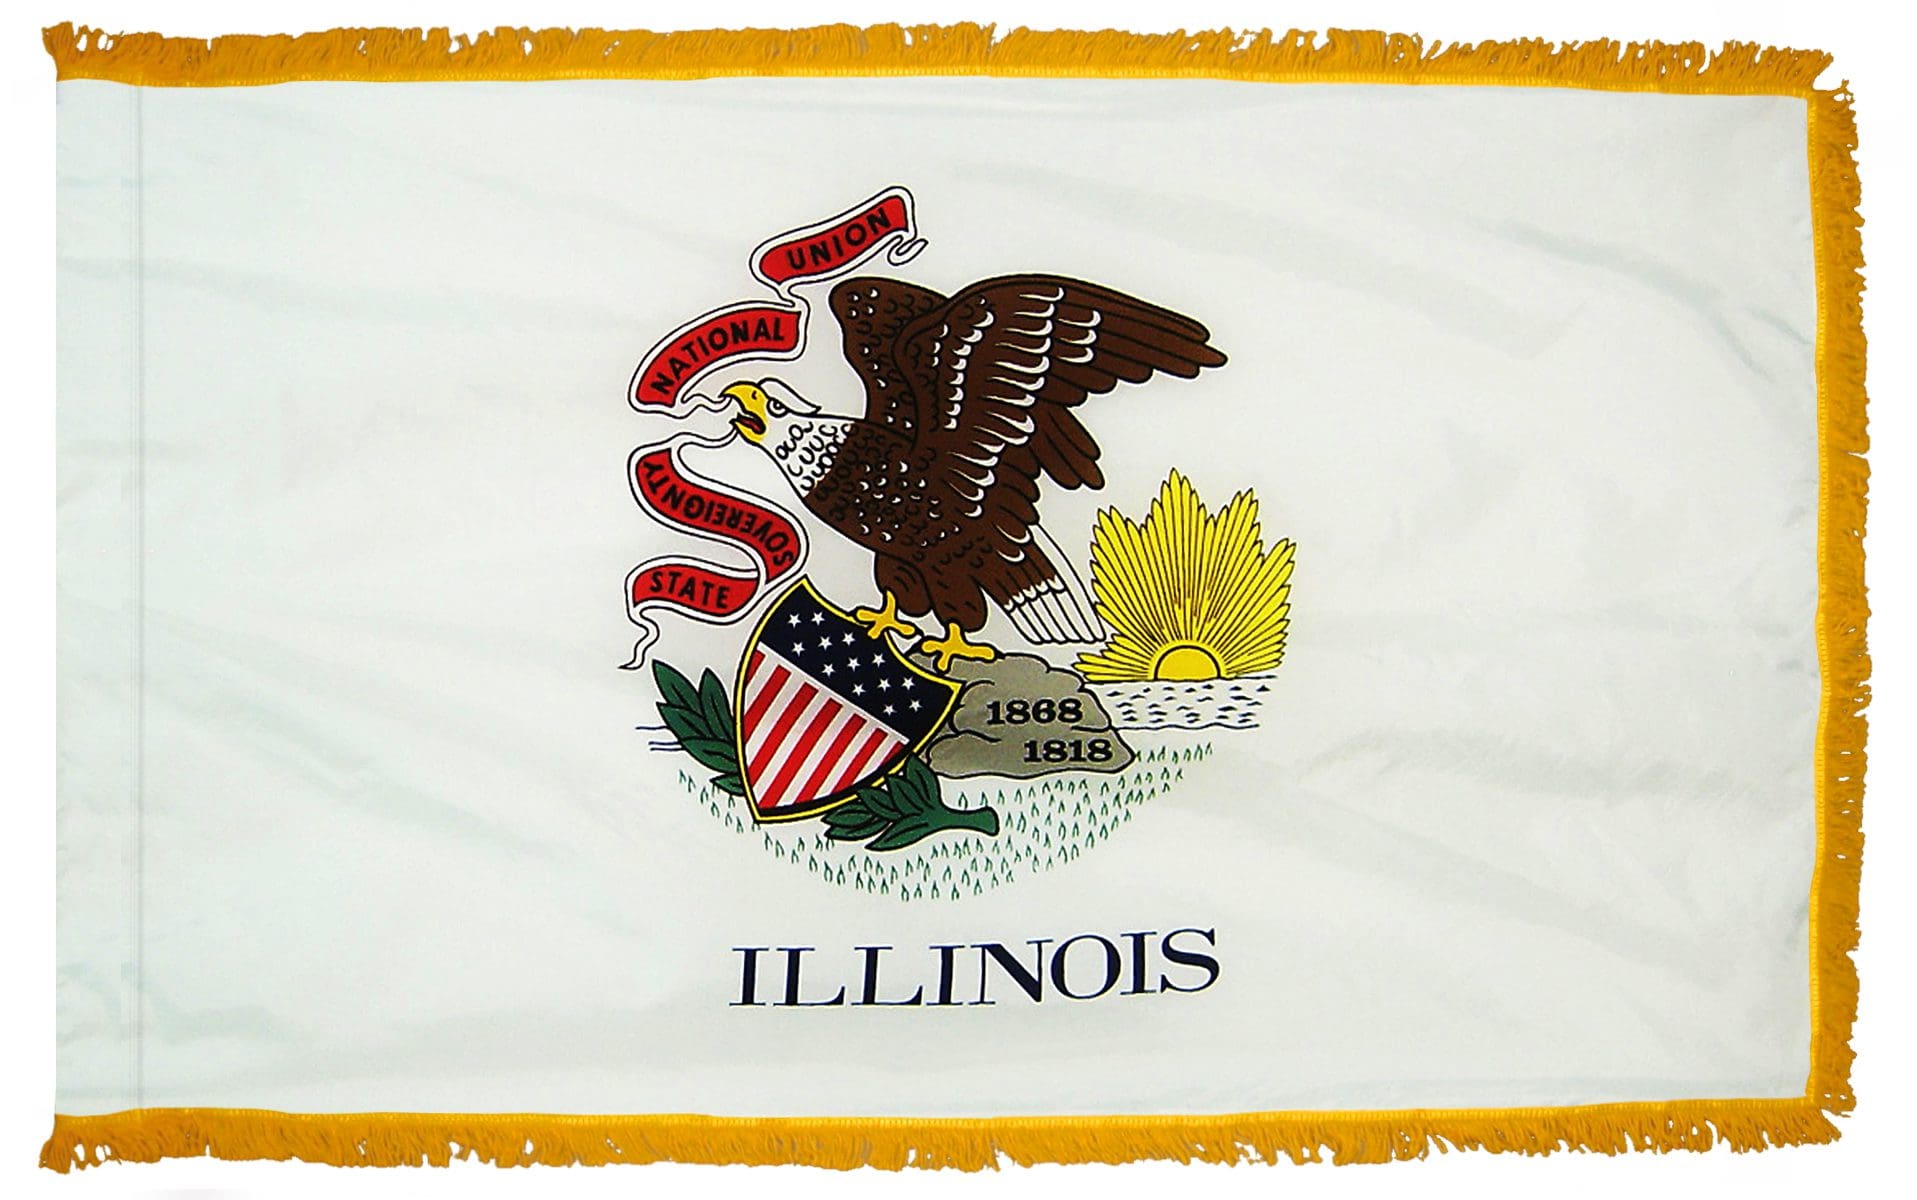 Illinois State Flag 3x5 or 4x6 ft. (fringed)